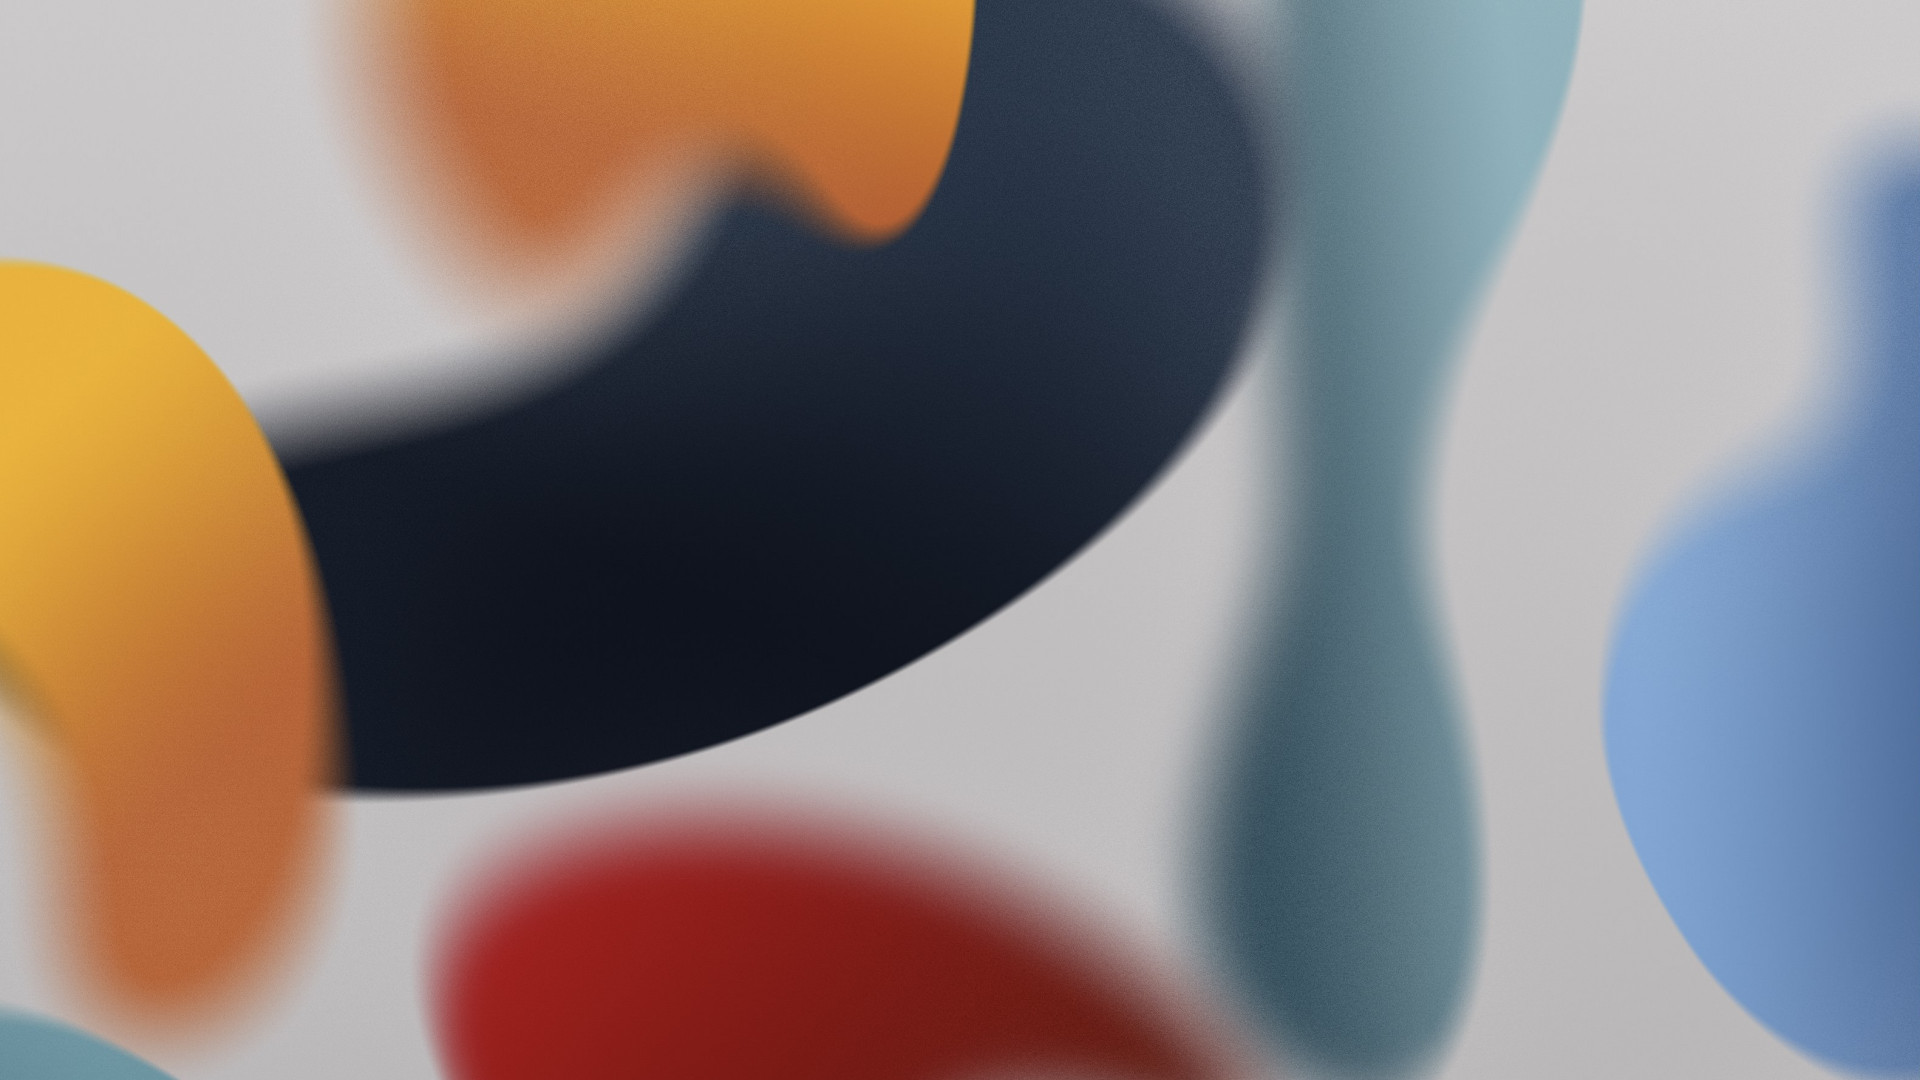 Abstract iOS 15 wallpaper 1920x1080